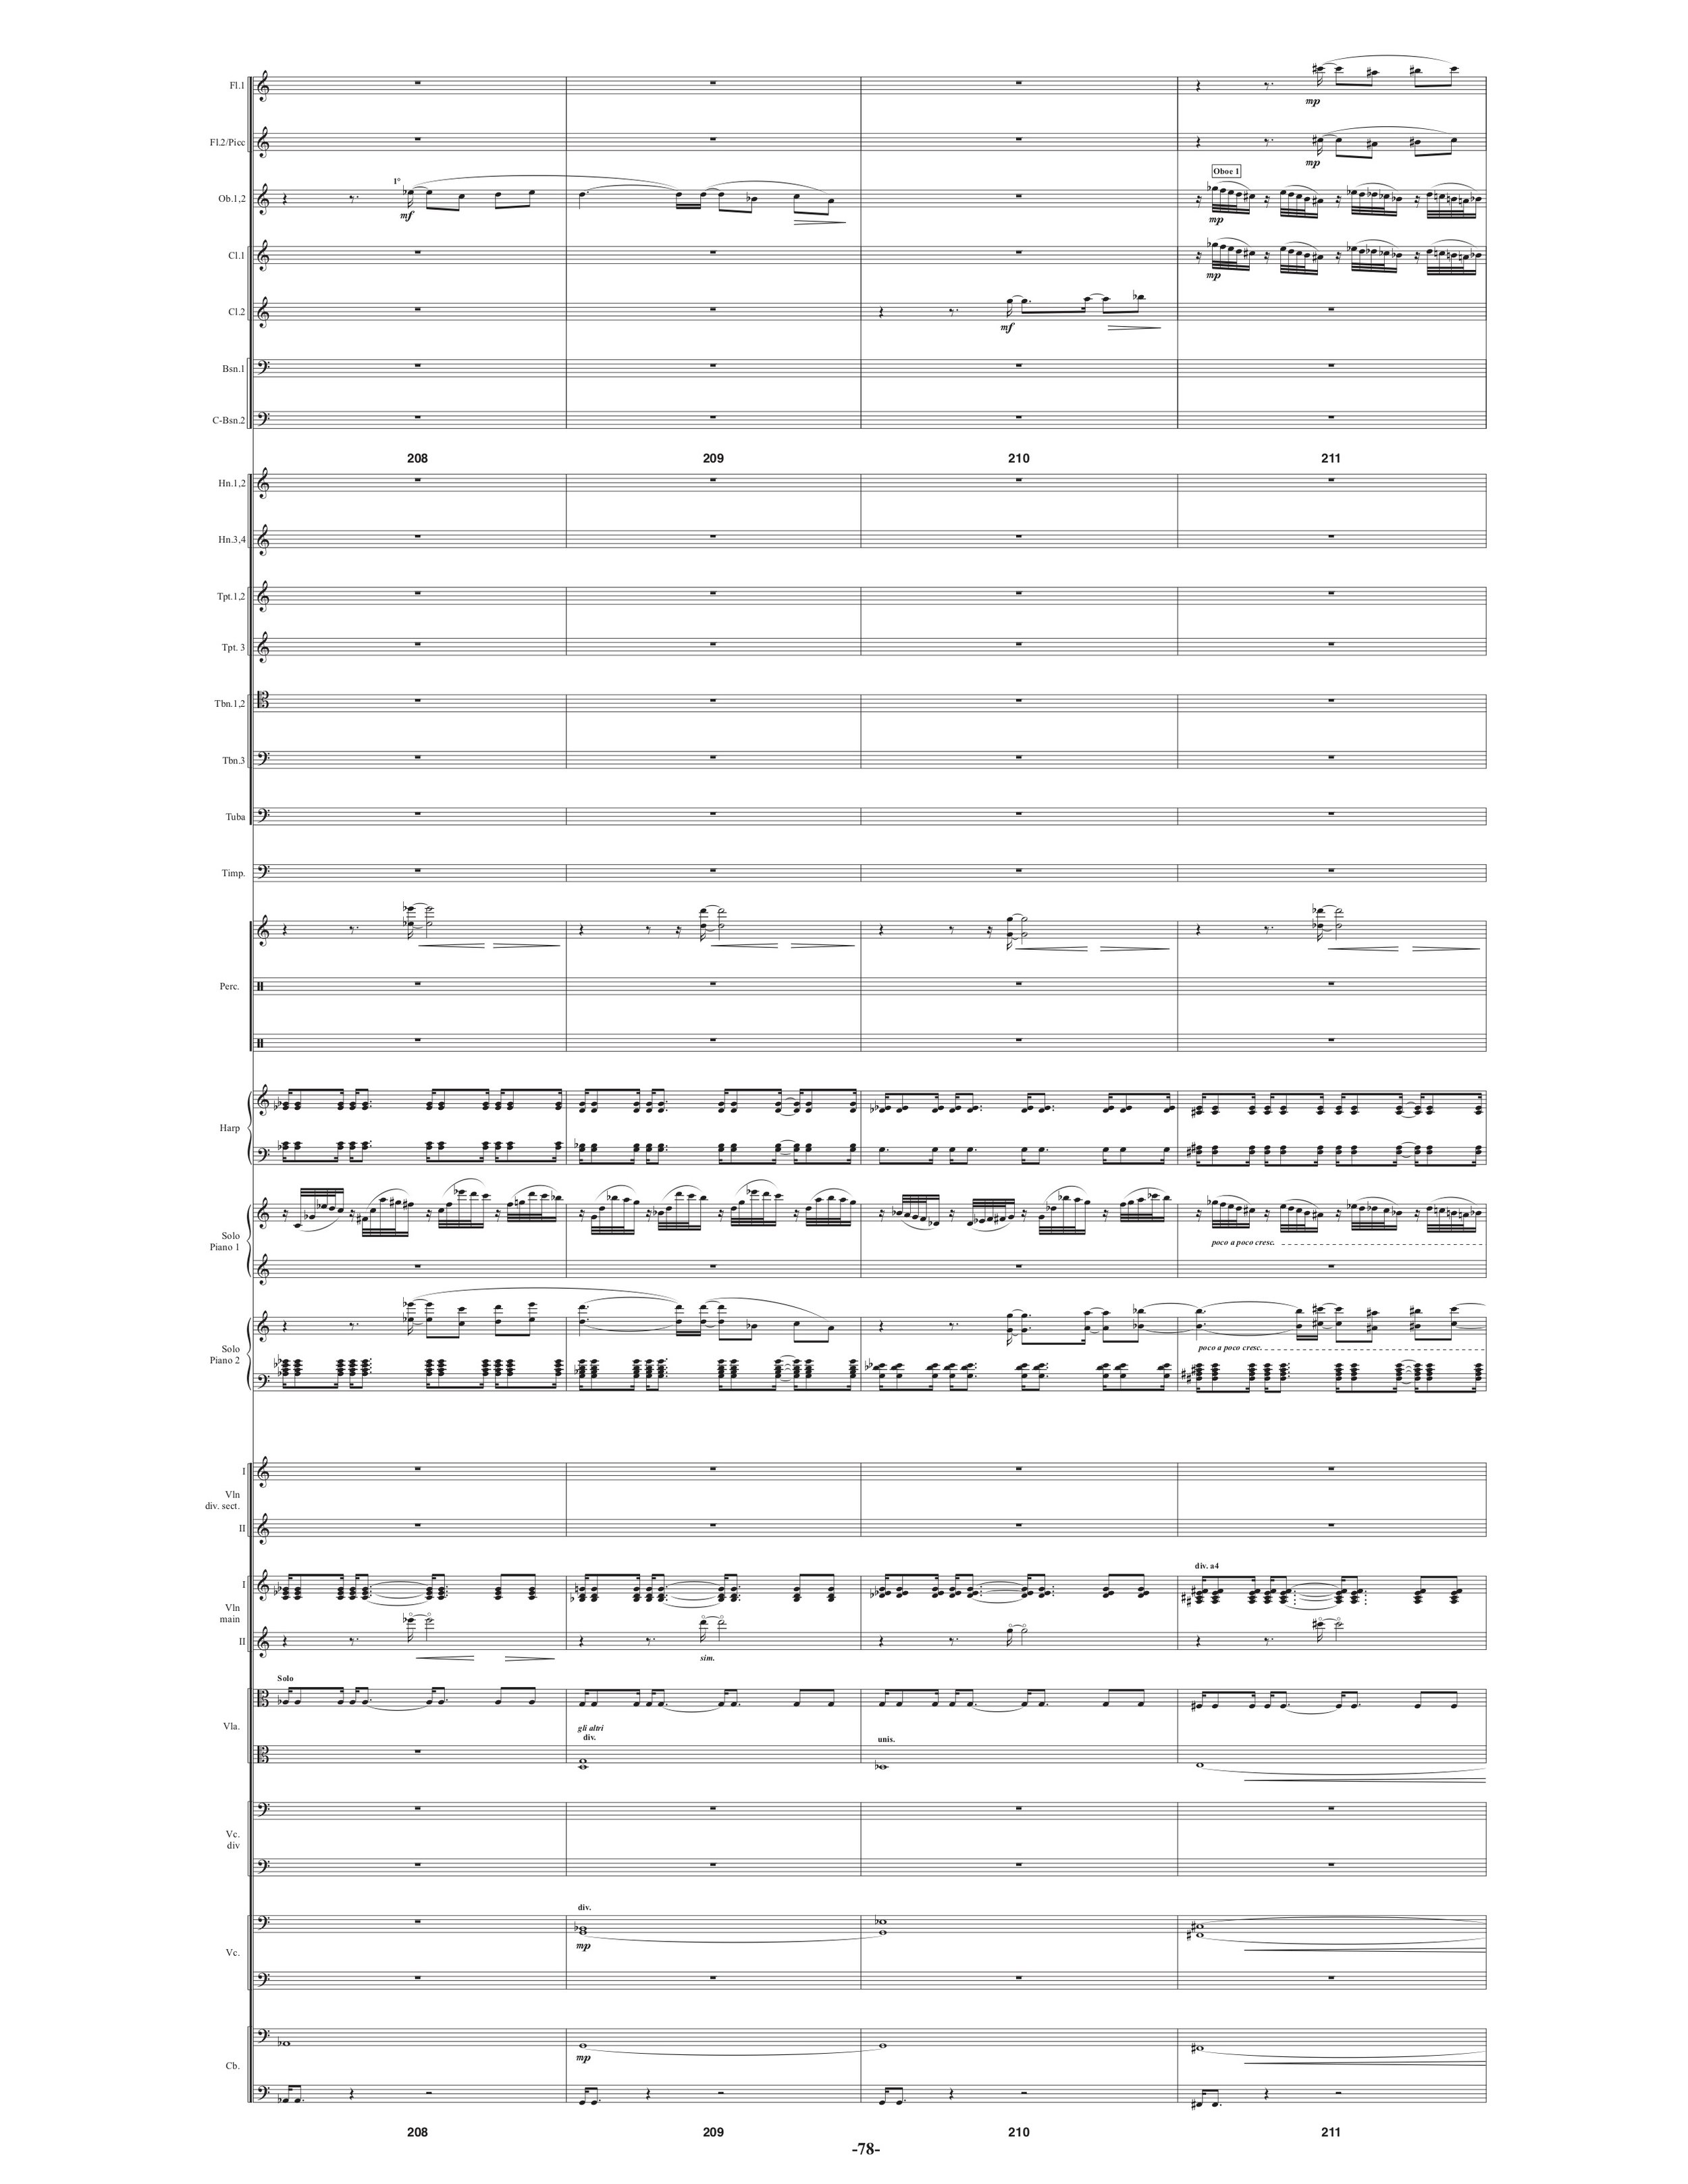 Symphony_Orch & 2 Pianos p83.jpg